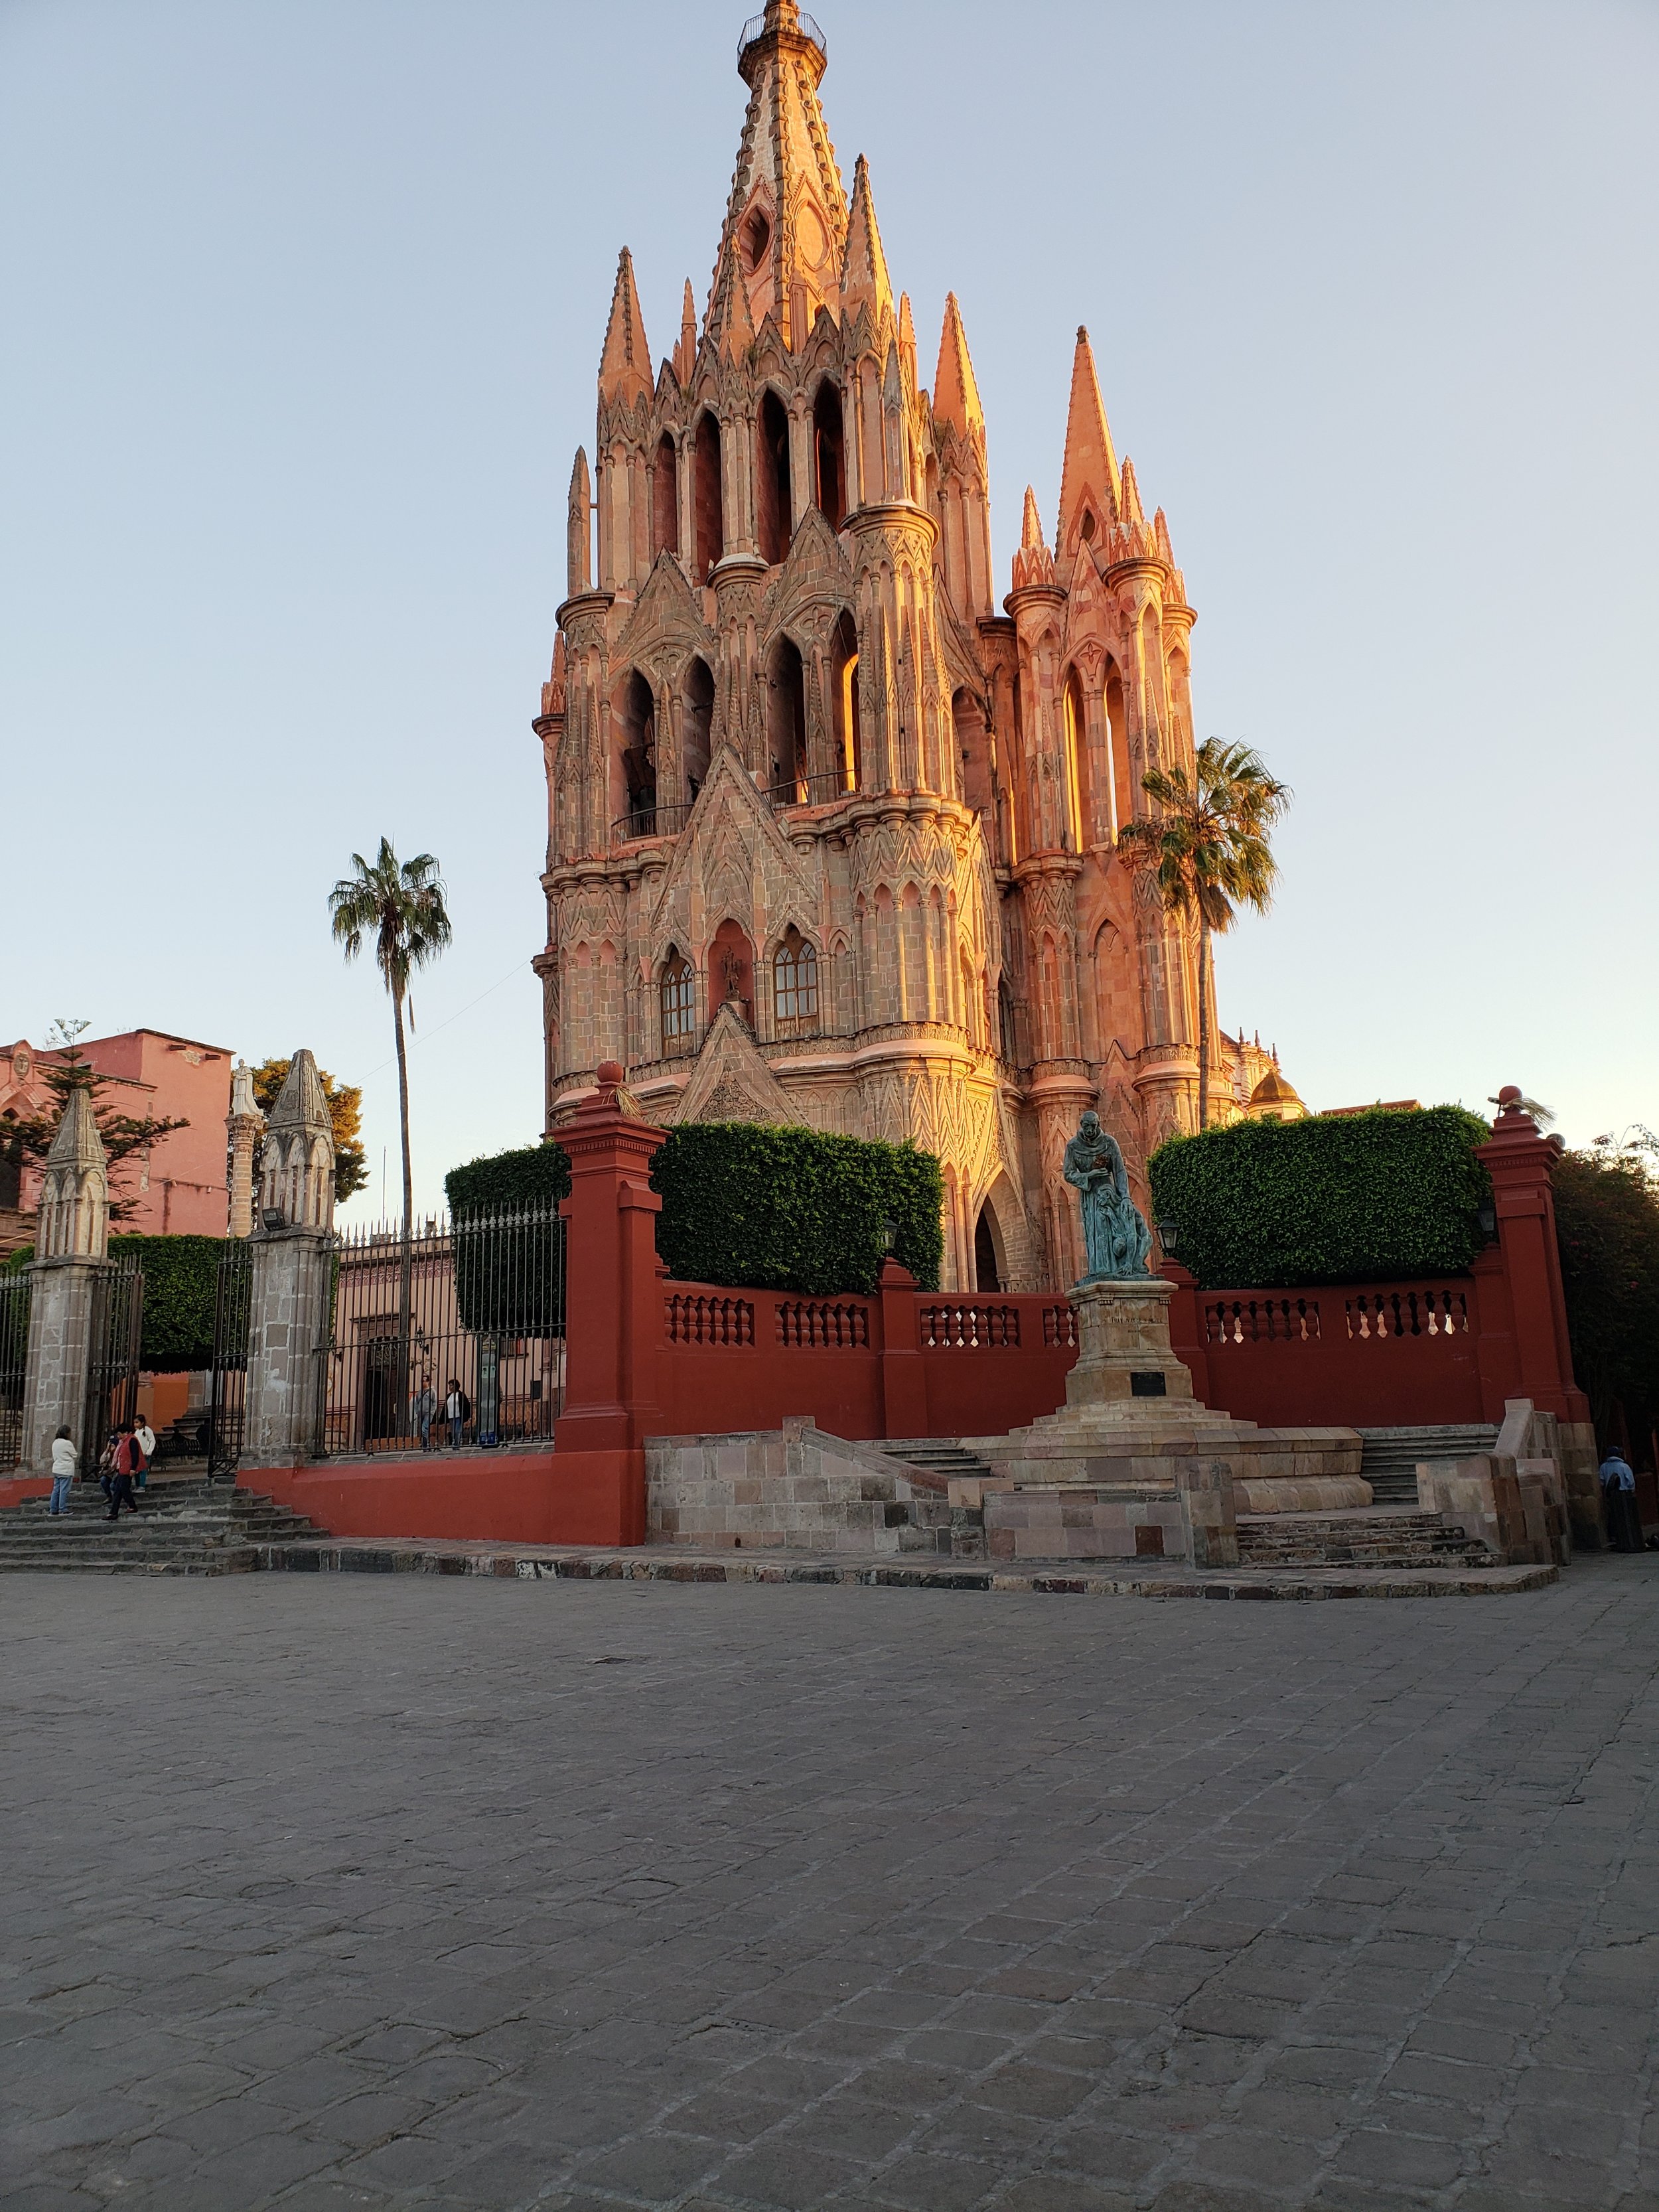 Church in main square of San Miguel de Allende